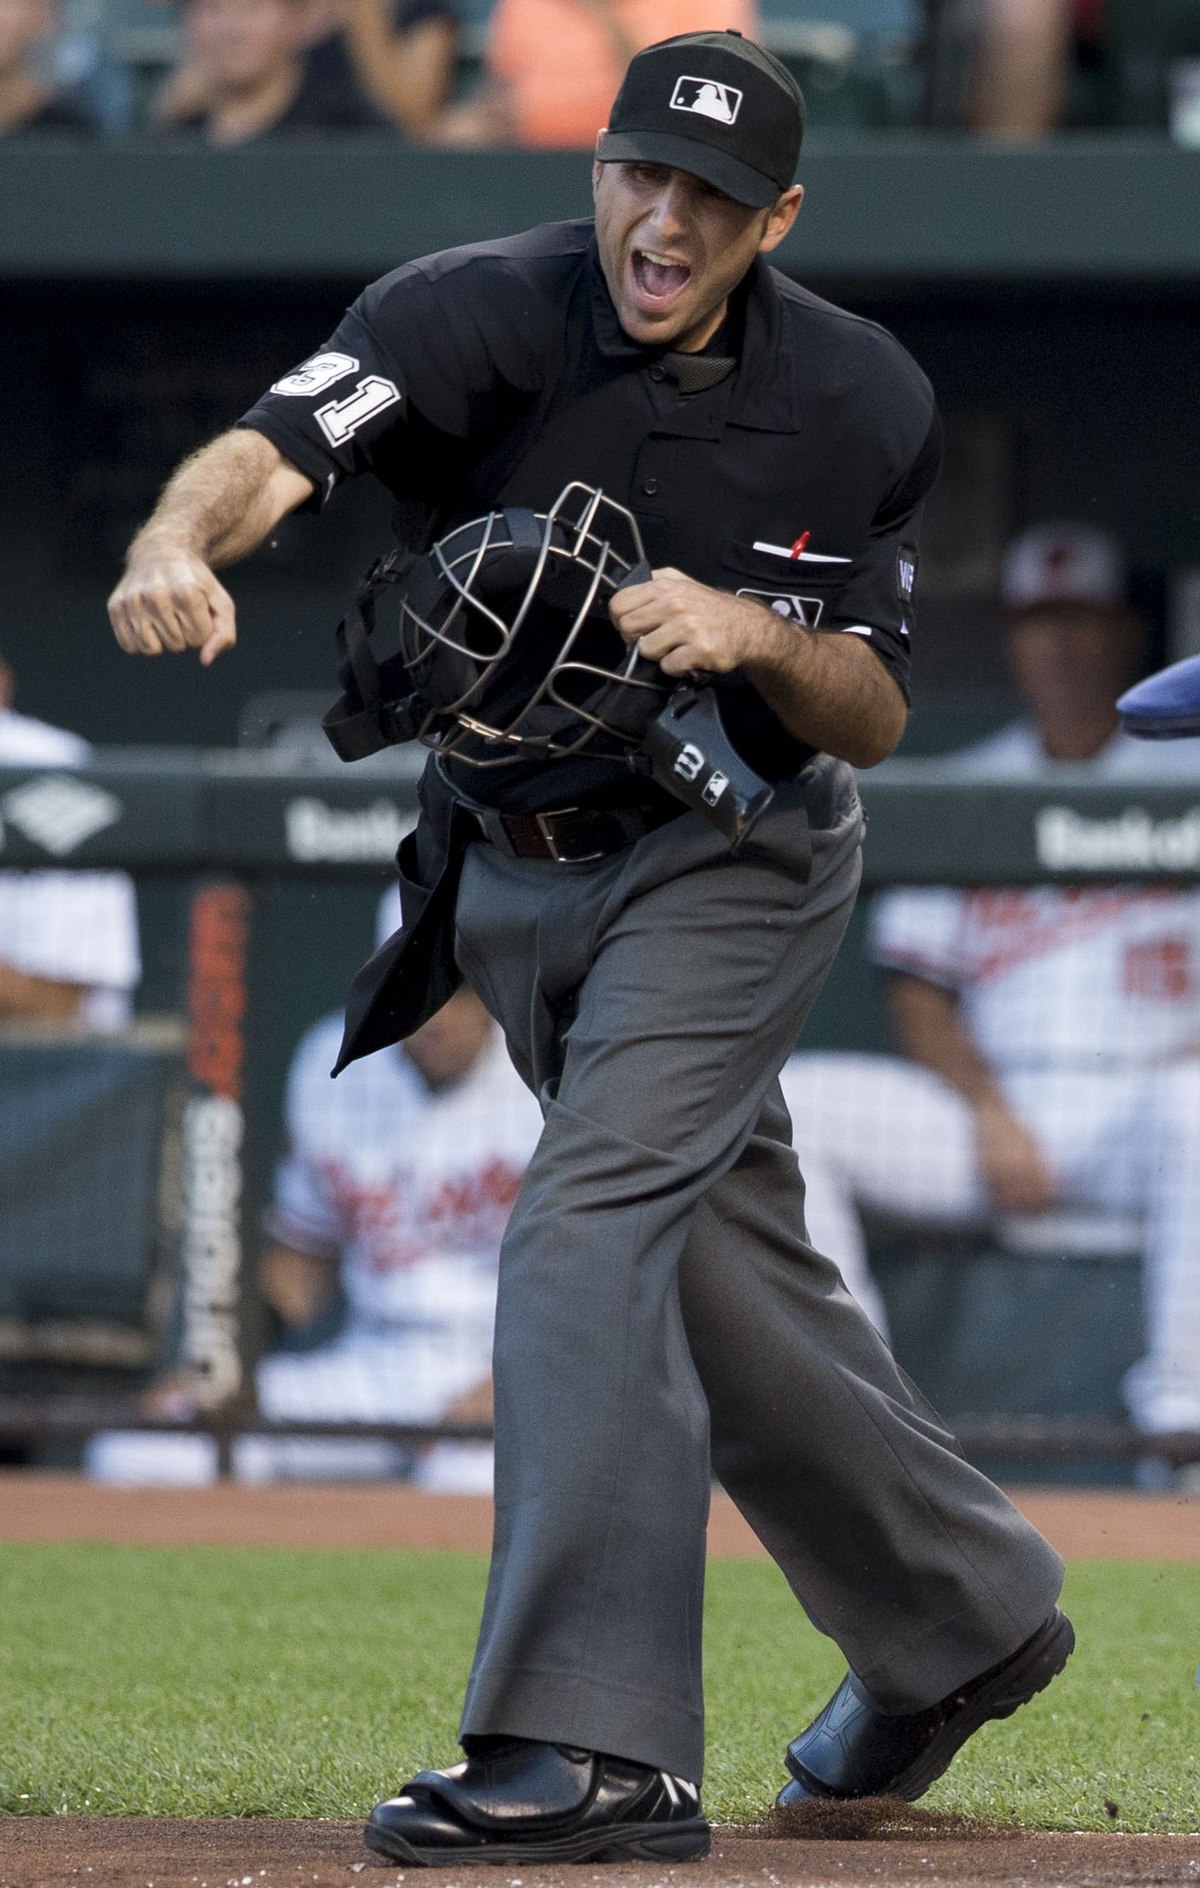 MLB umpire, Urbandale native Pat Hoberg selected to work World Series